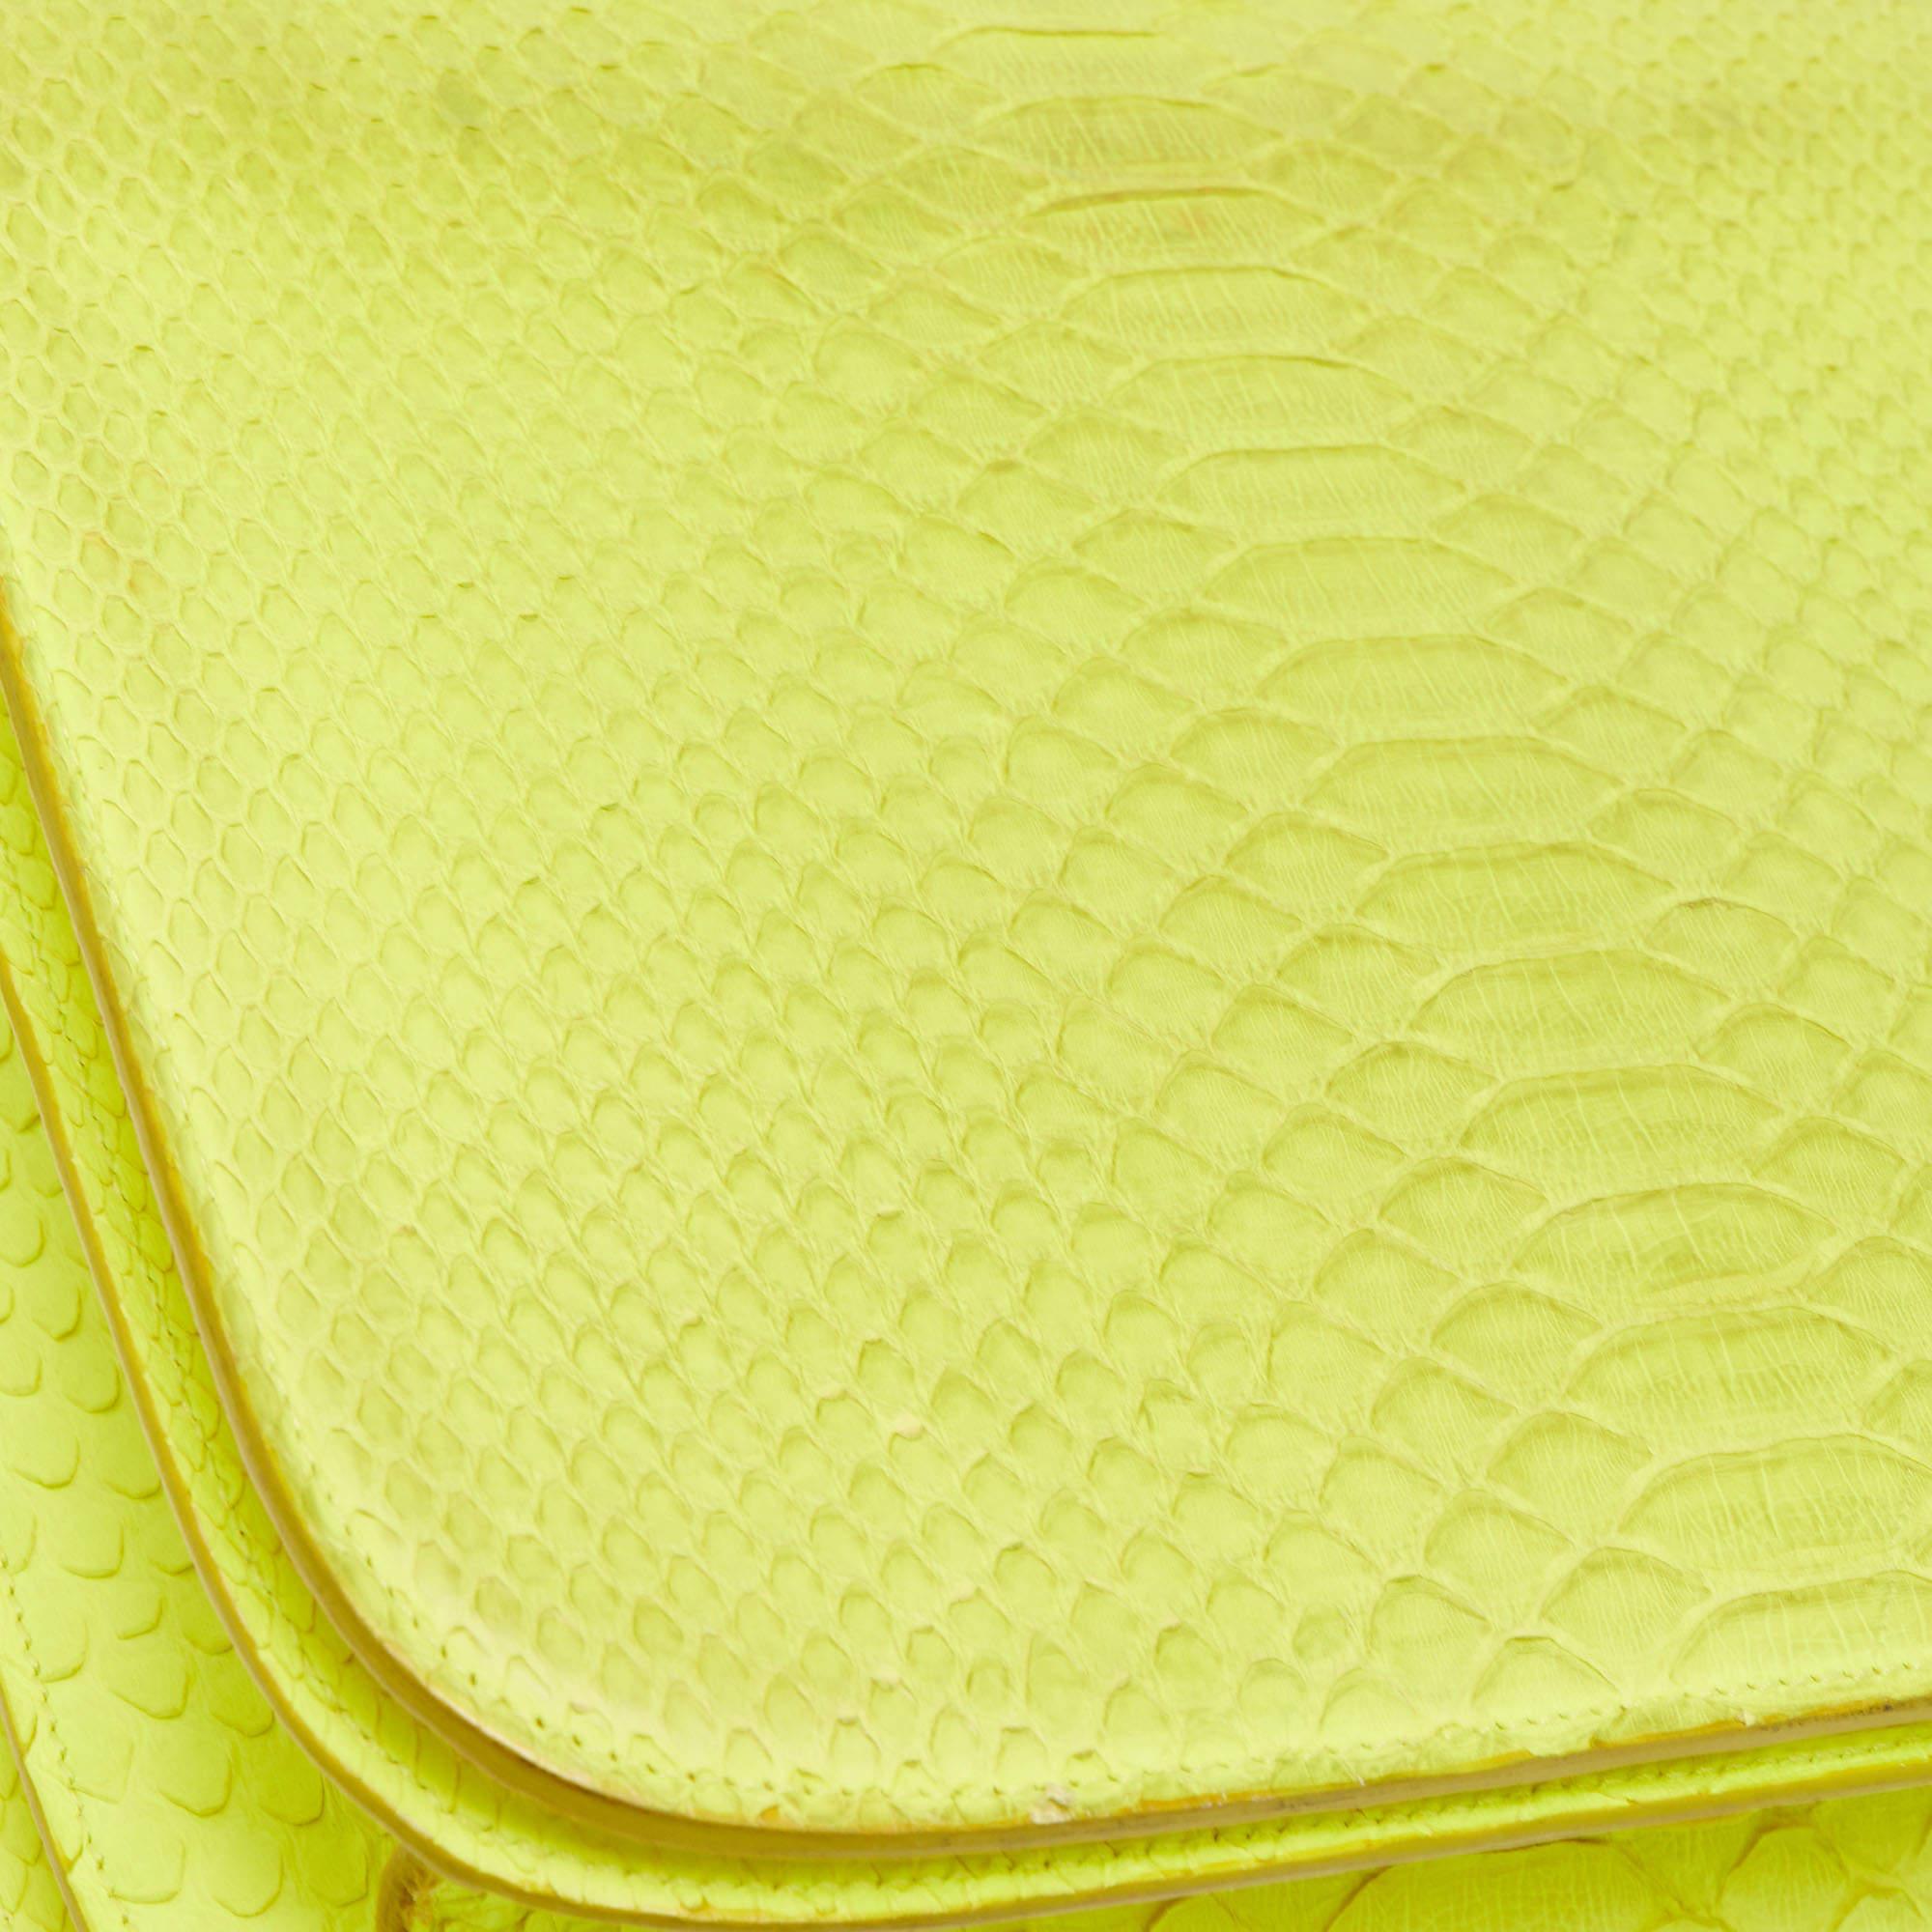 Yellow Celine Neon Green Python Medium Classic Box Shoulder Bag